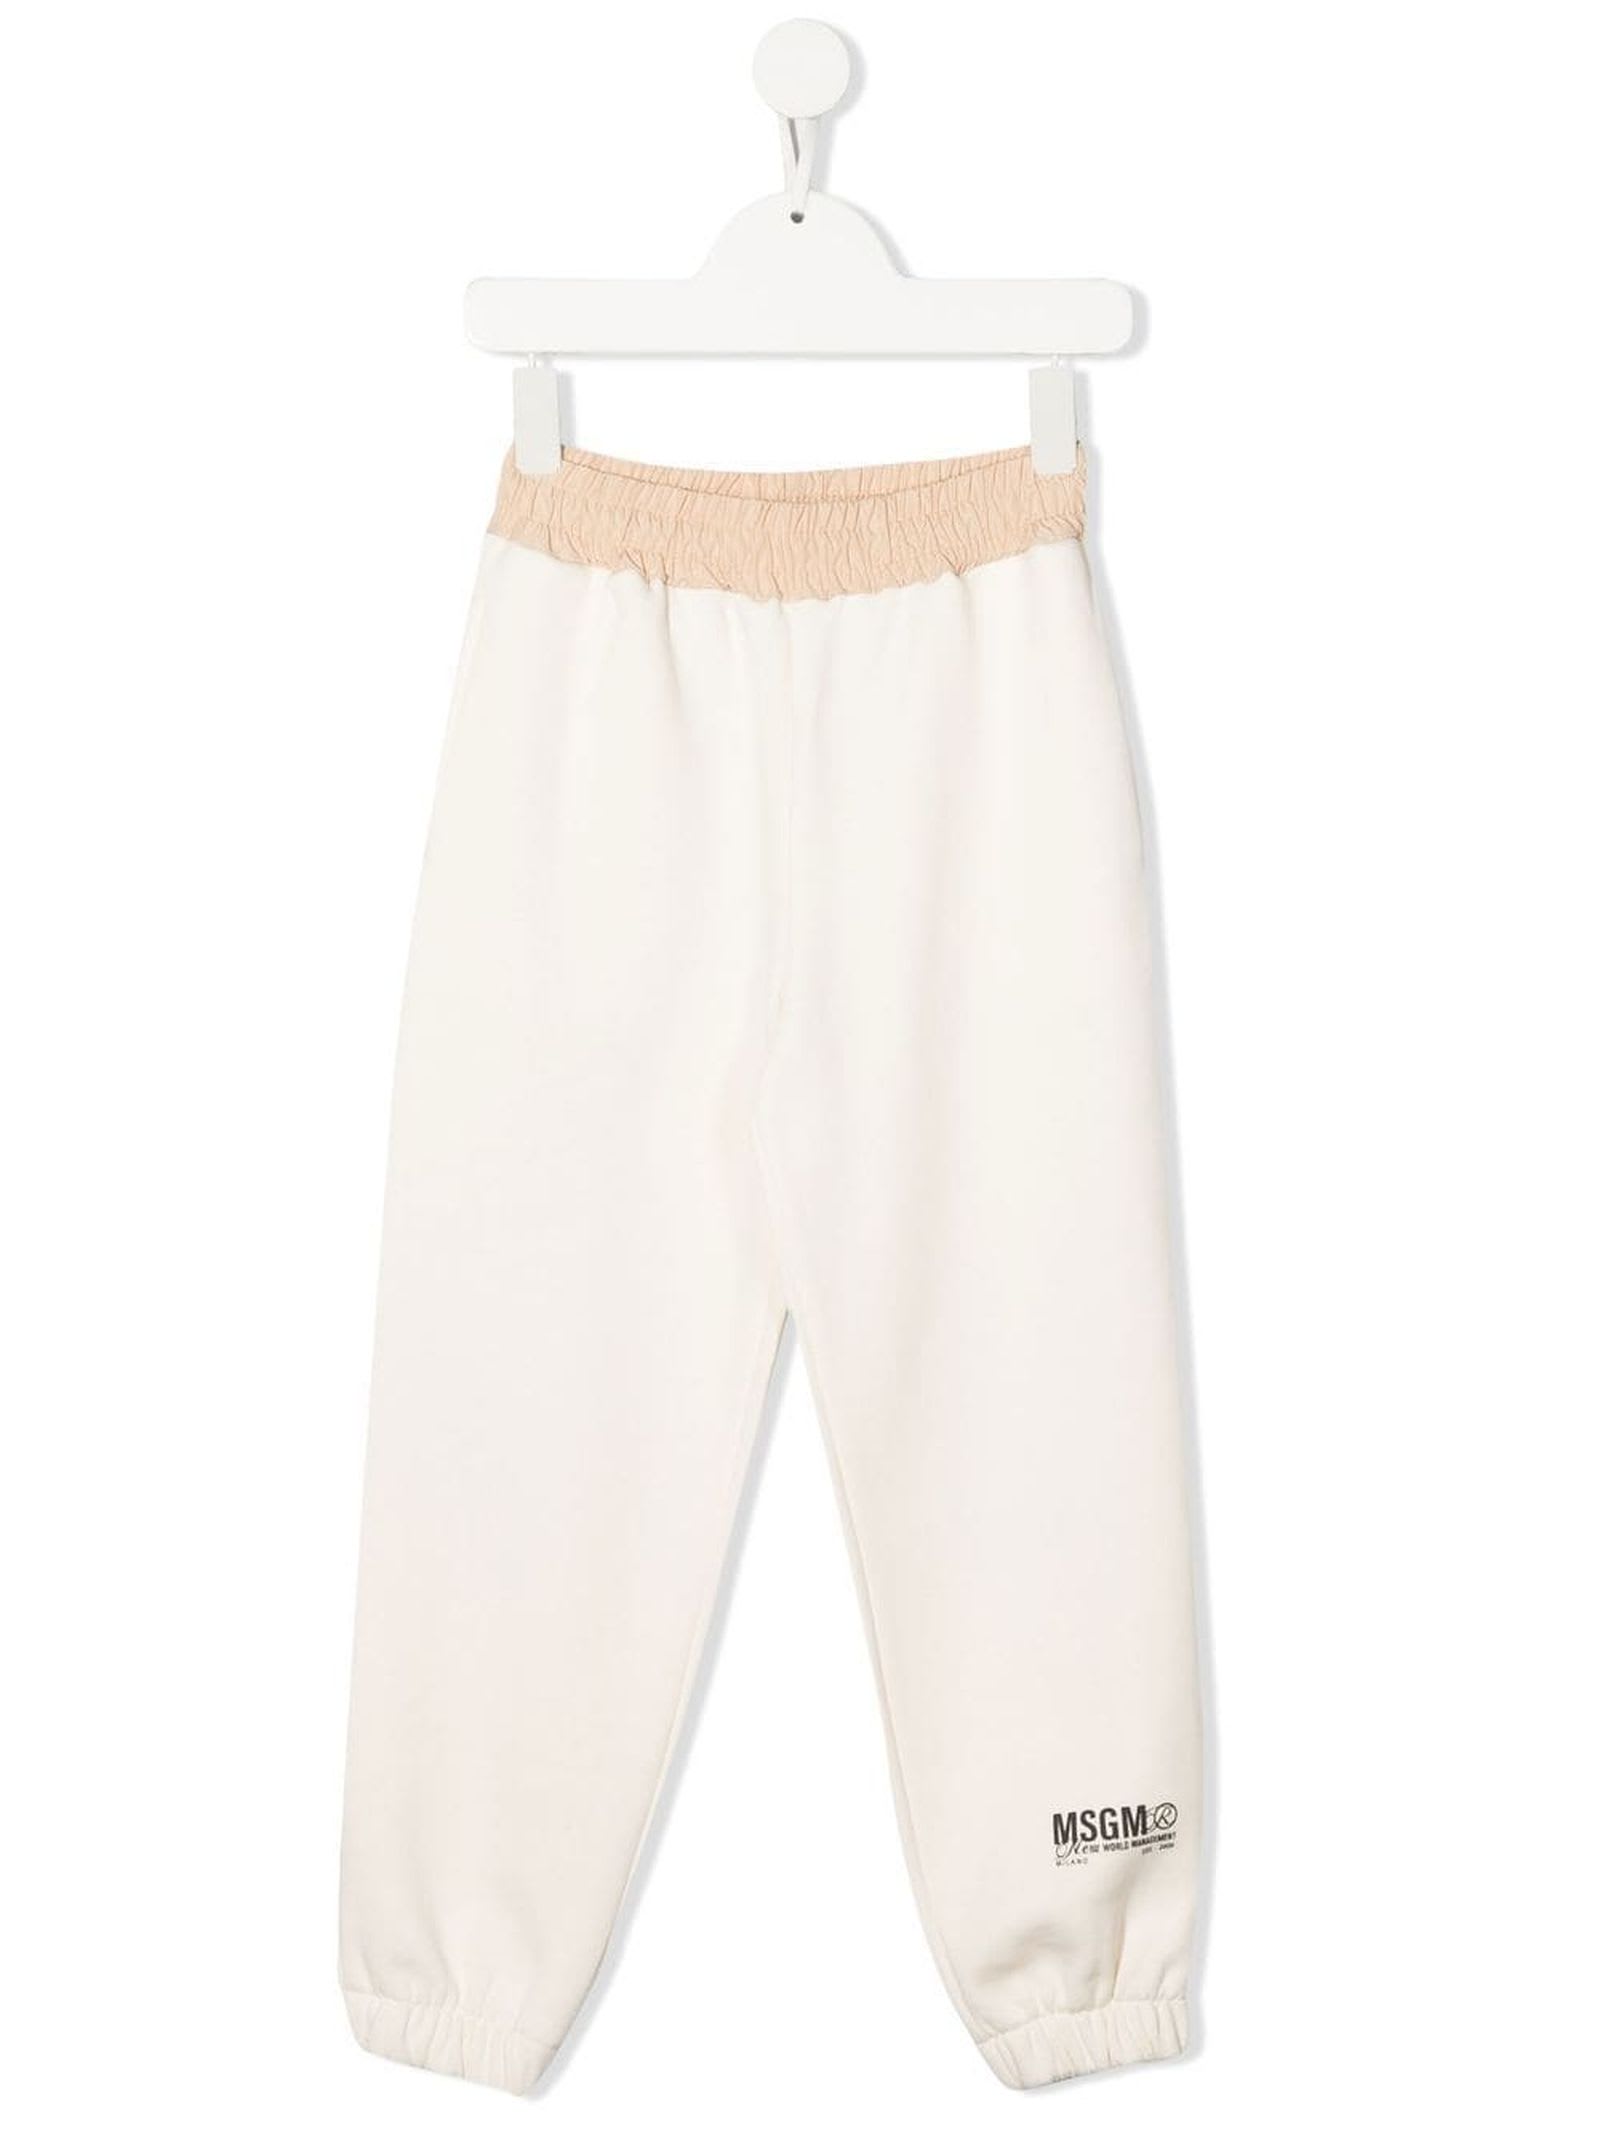 MSGM White Cotton Track Pants